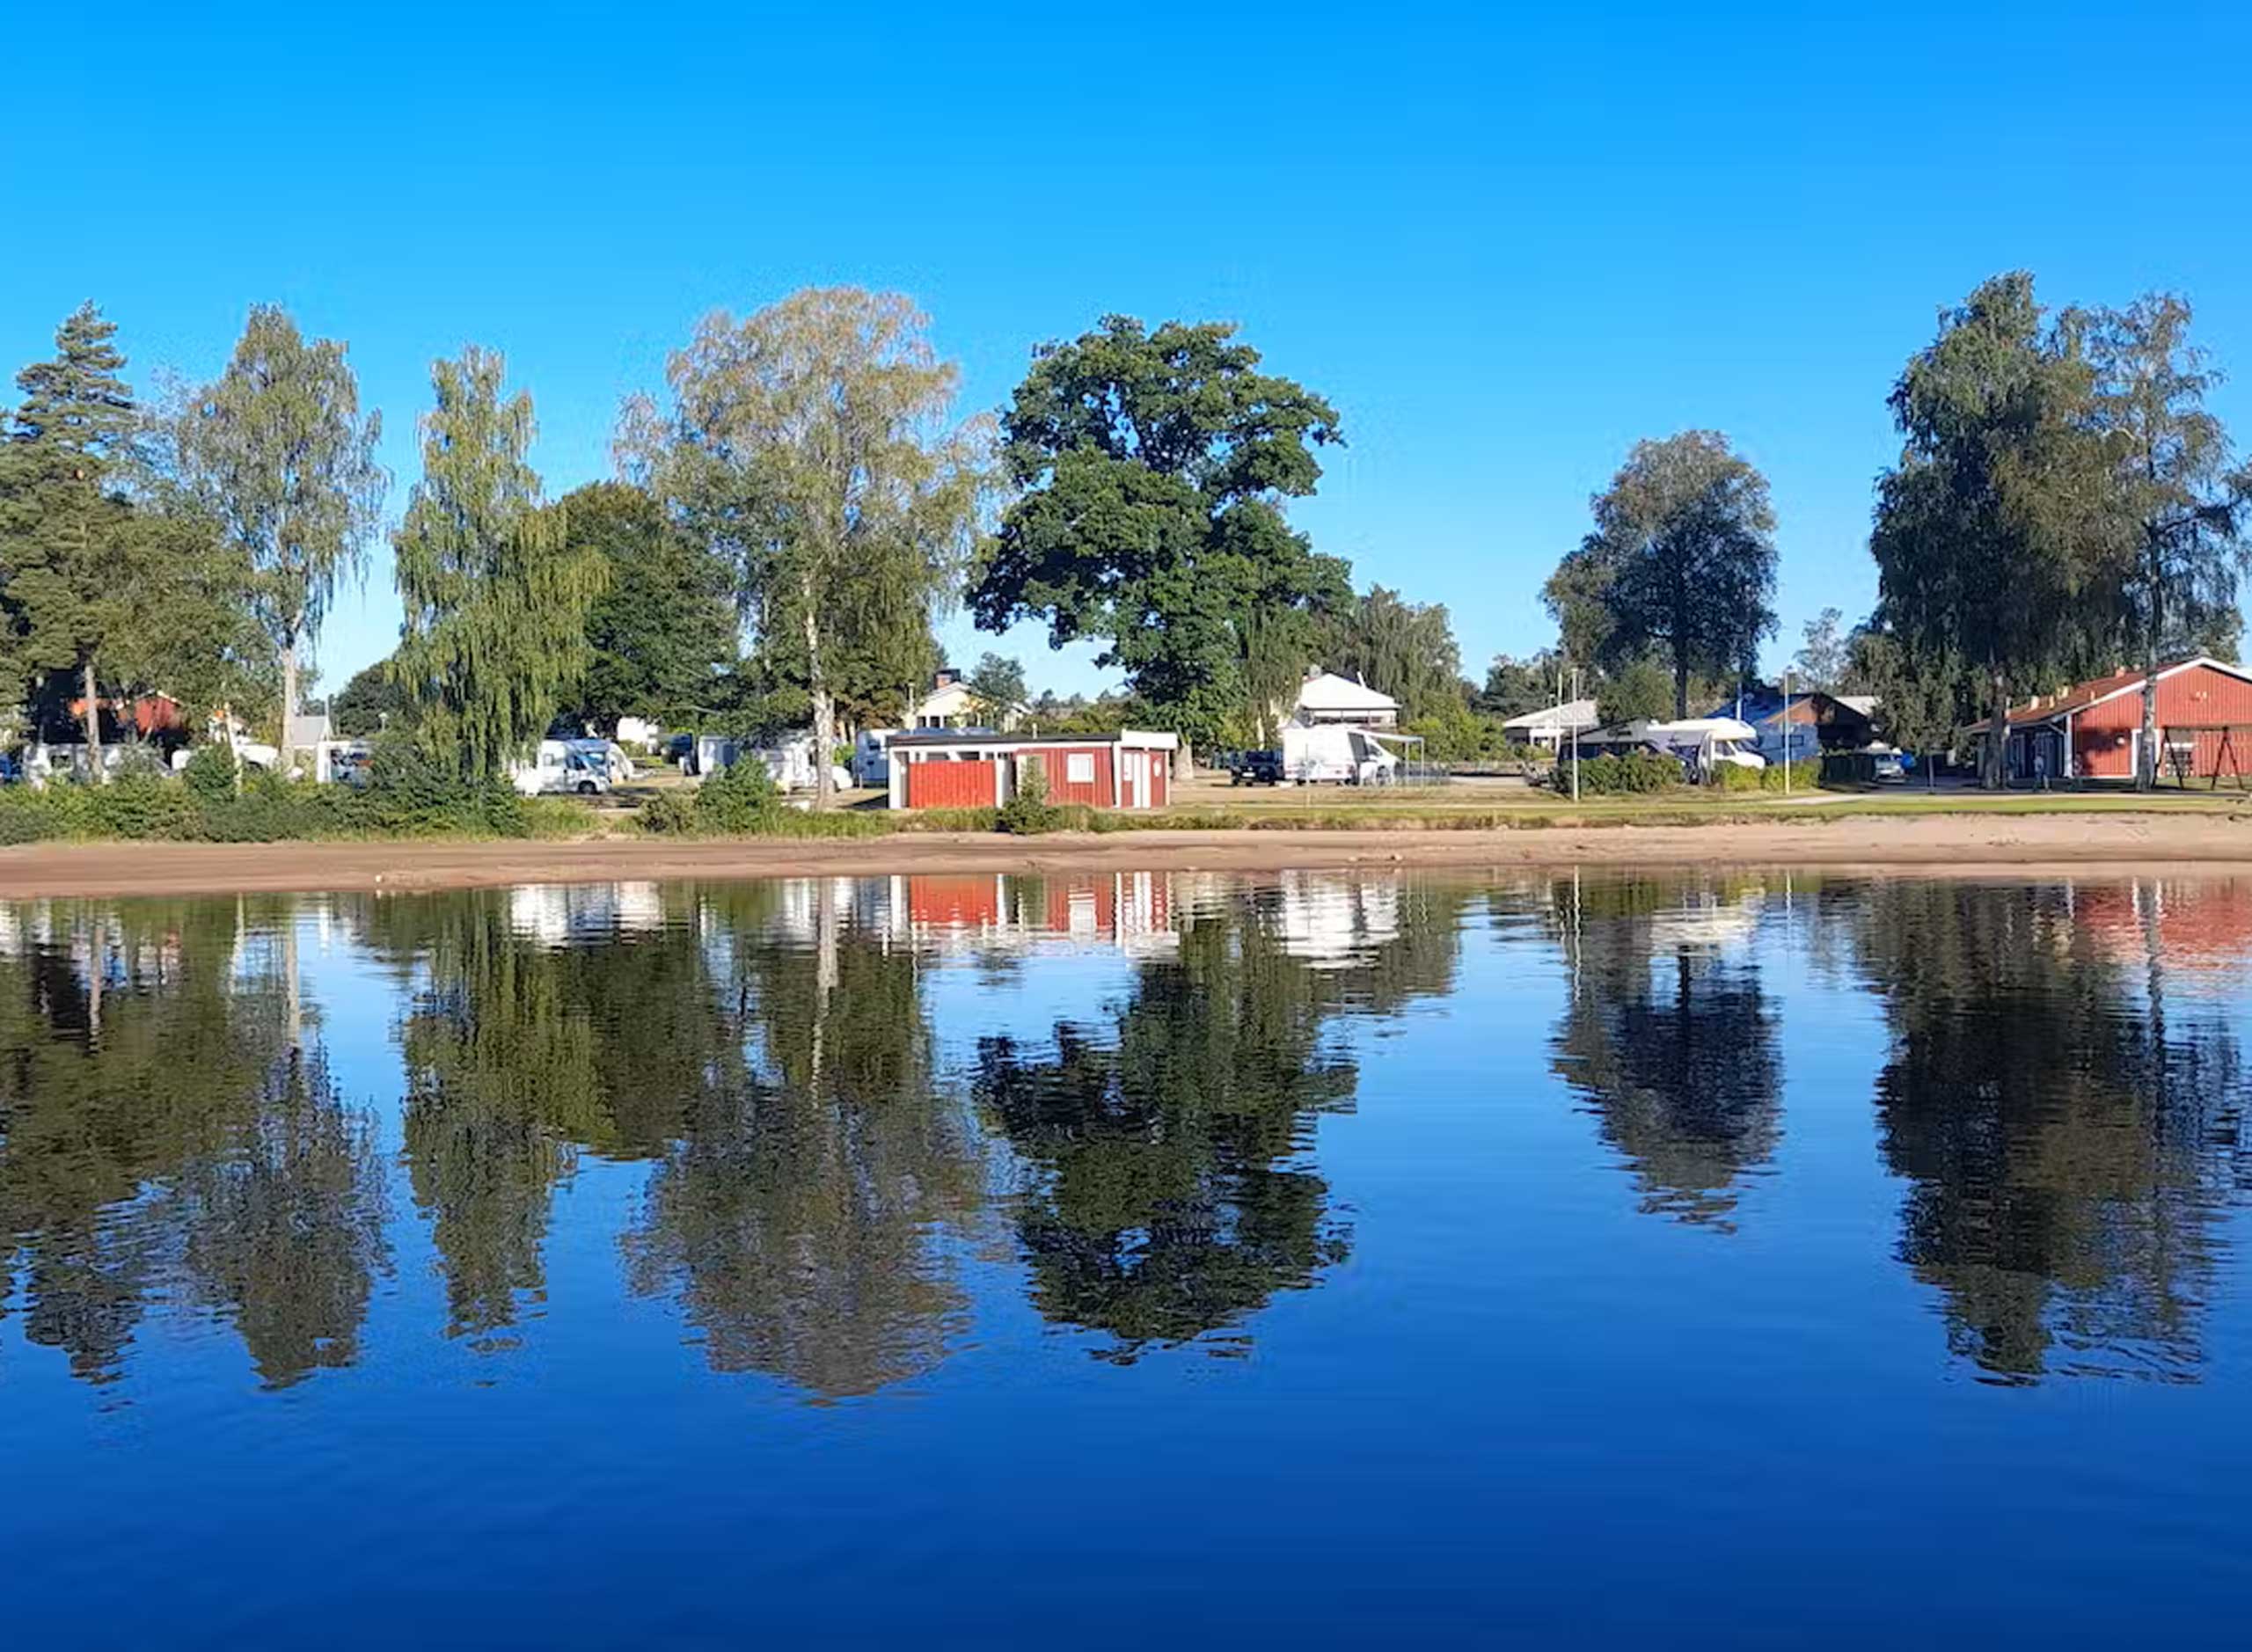 På Gökaskratts Camping kan du bo i et dejligt område ved søen. 